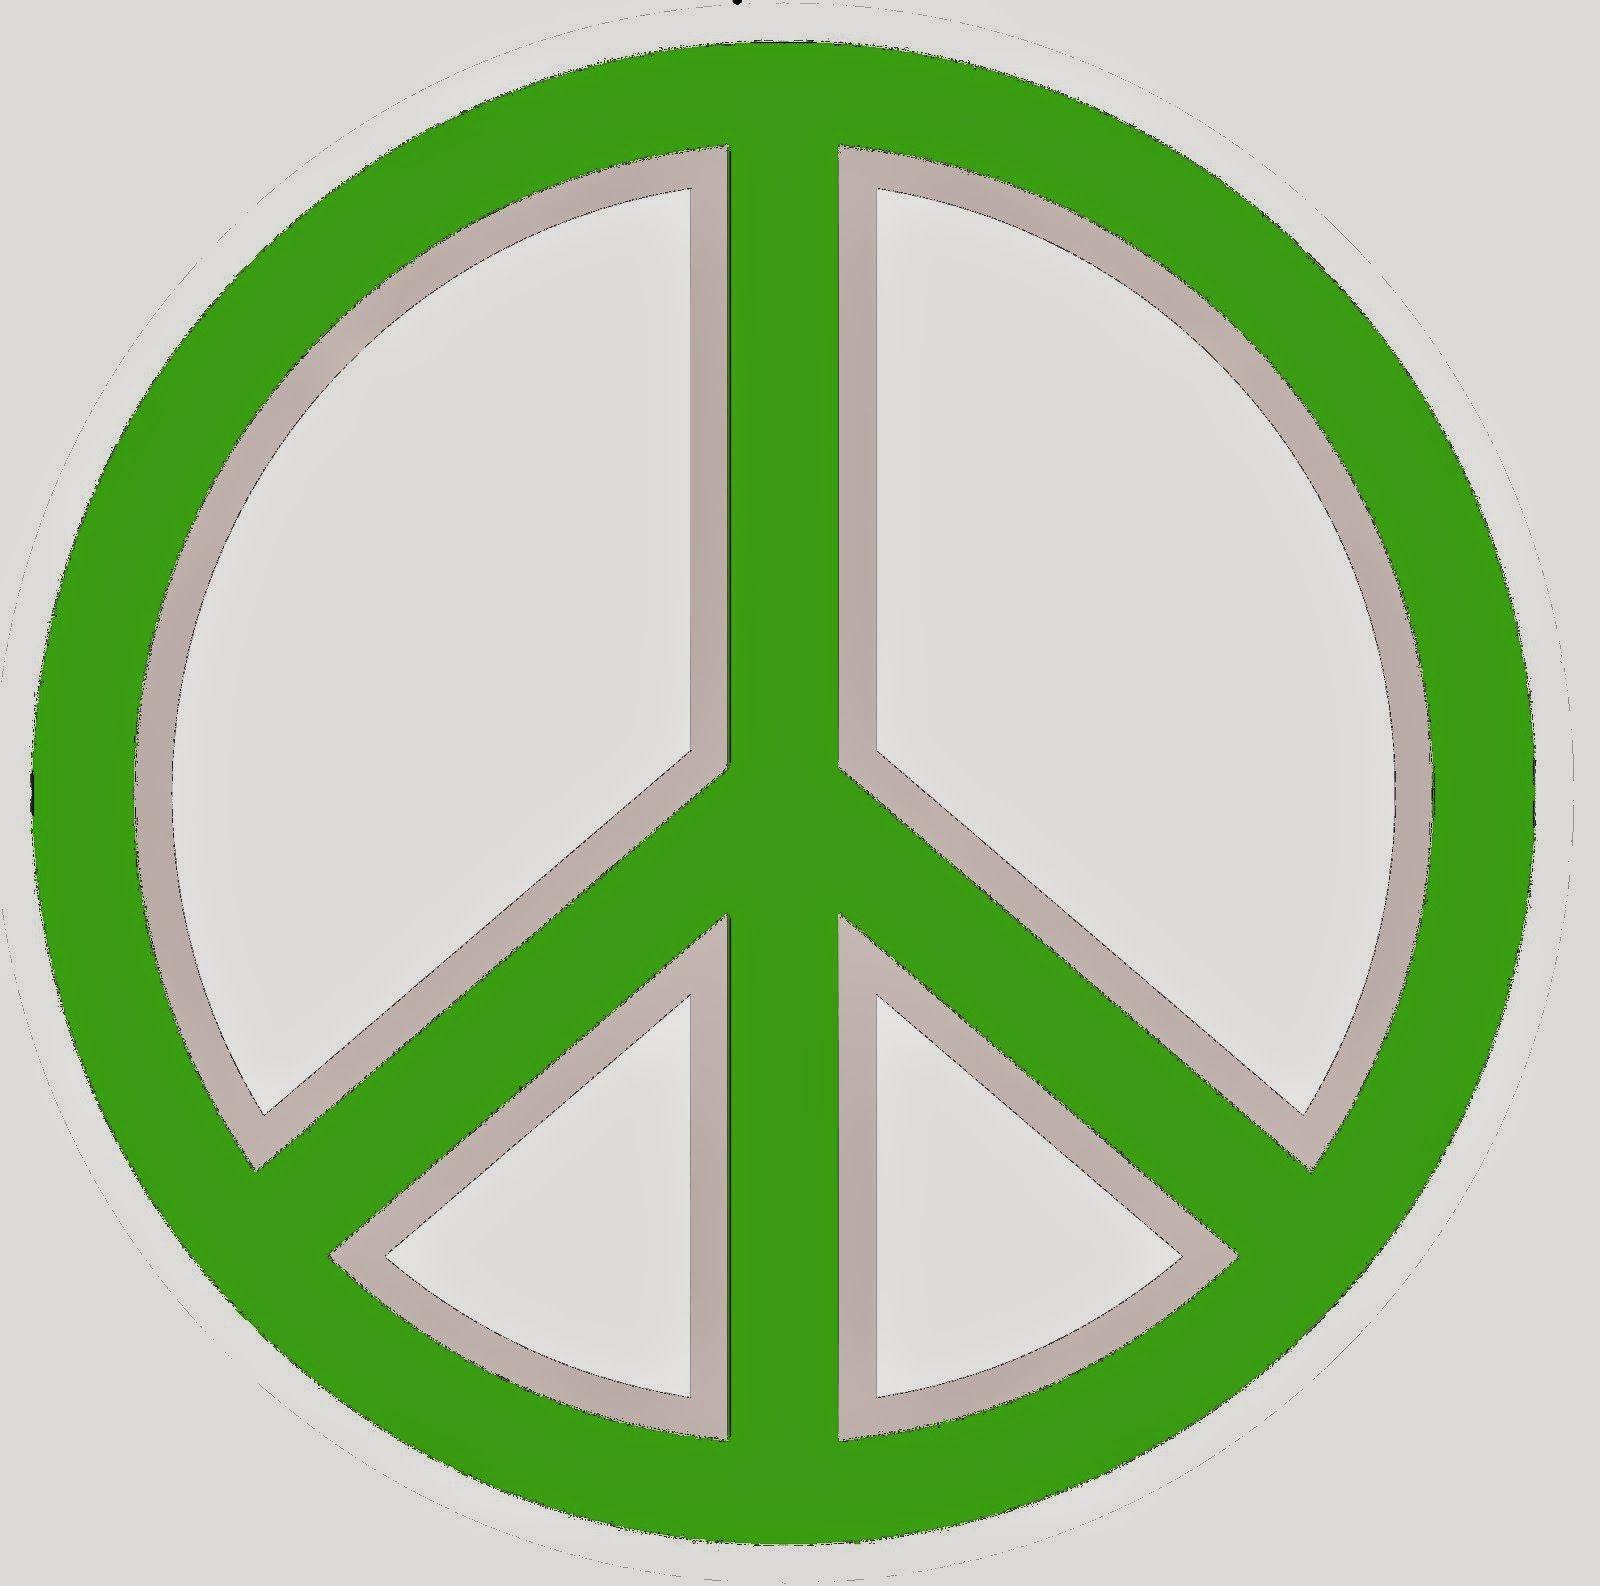 Black and Green Circular Logo - Y in a circle Logos